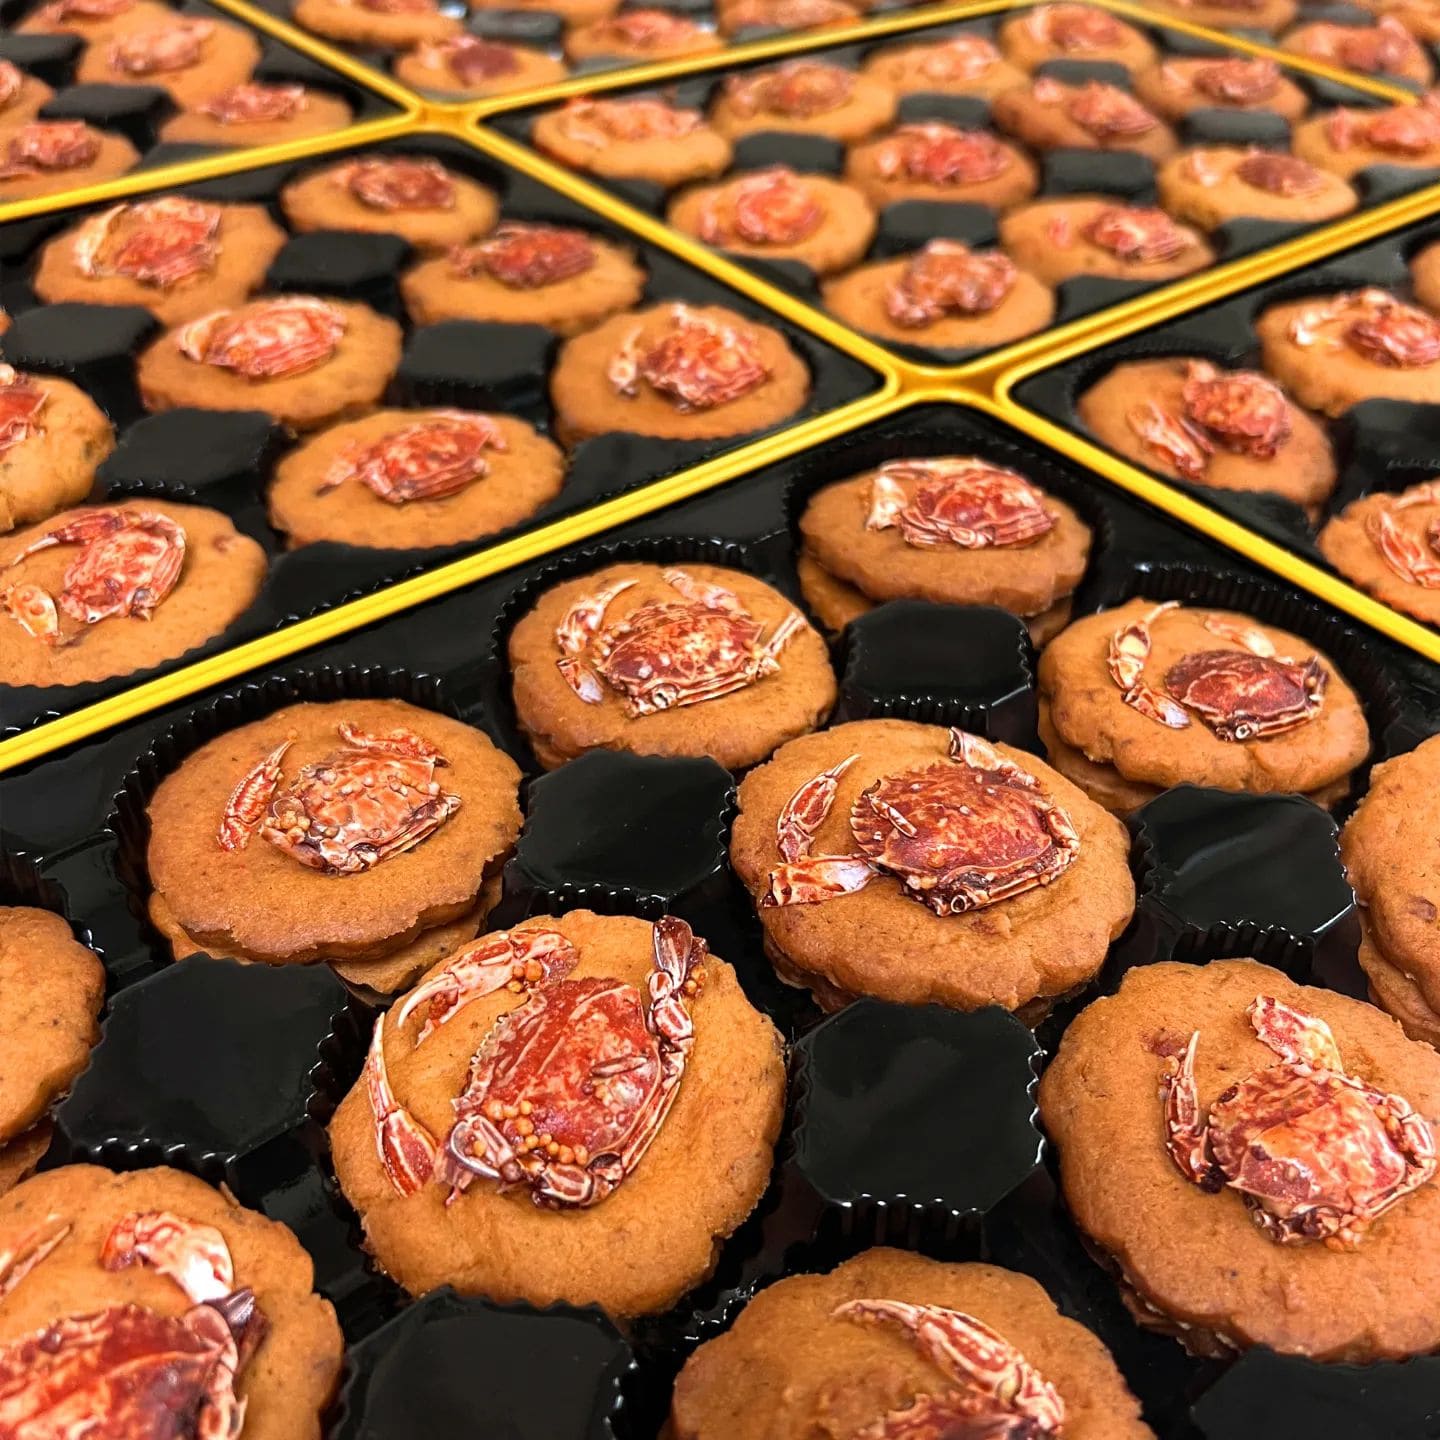 singaporean snack brands-the cookie museum cookies